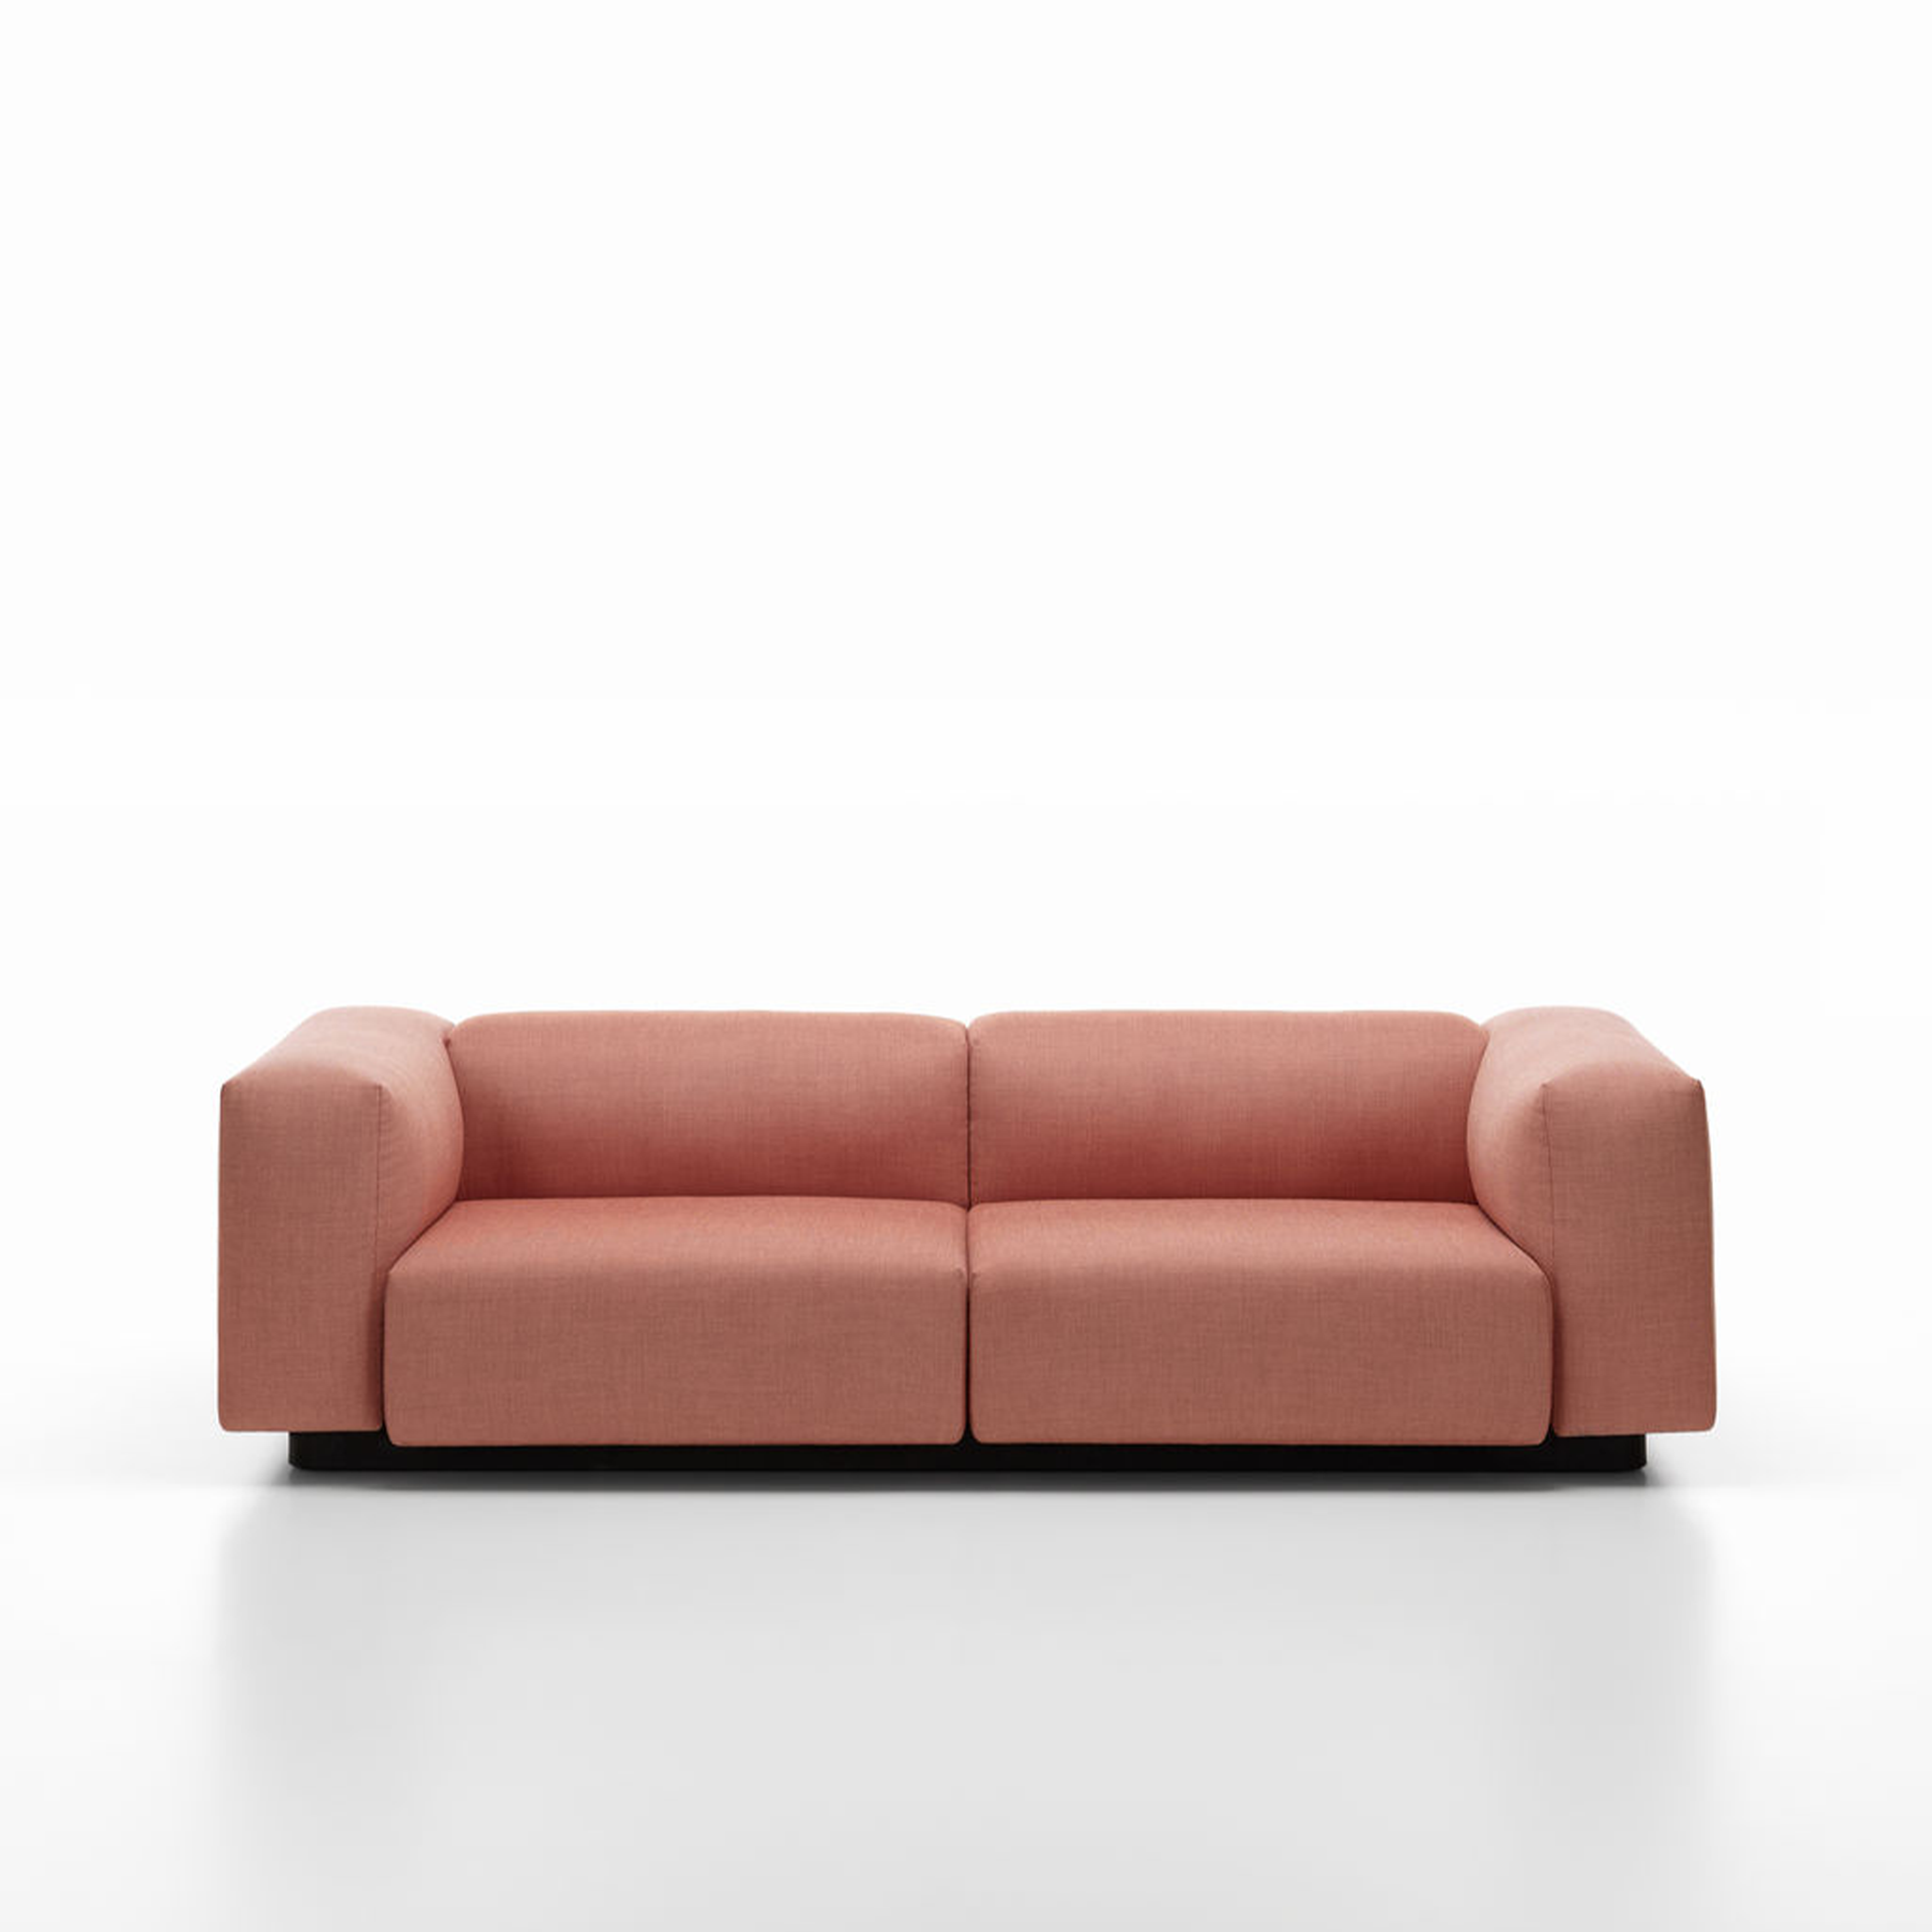 Soft Modular Sofa By Vitra Haus